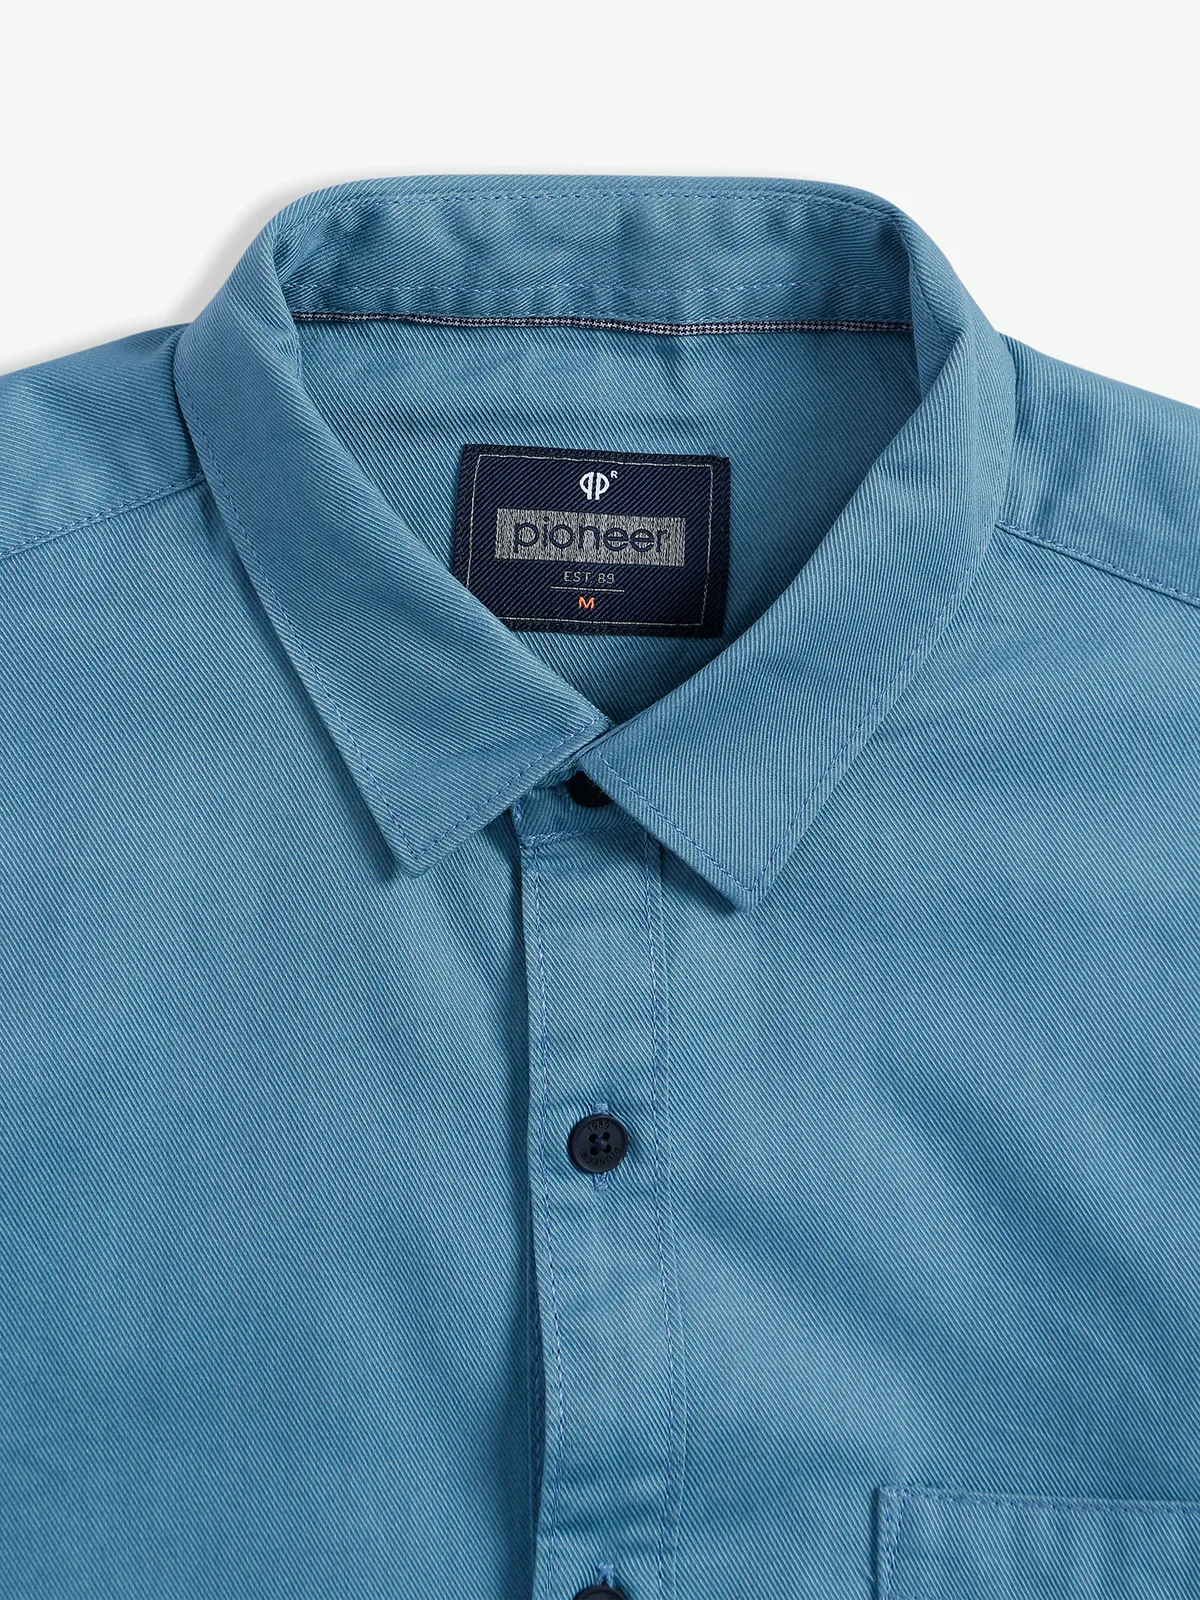 Pioneer cotton plain blue shirt